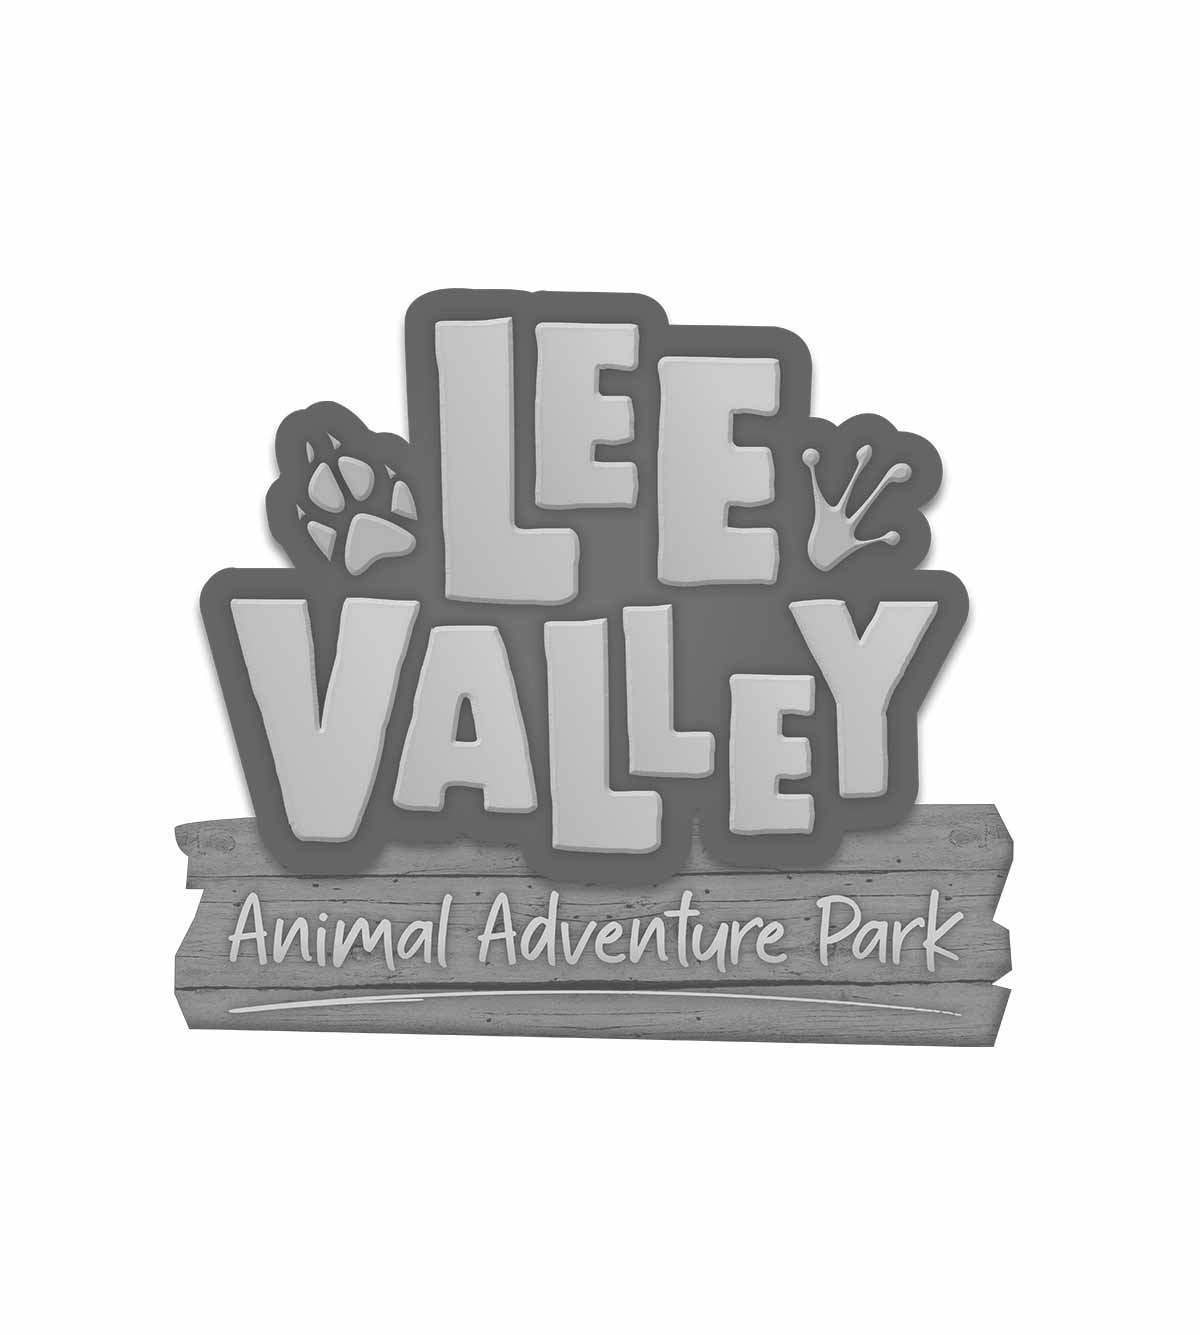 Supplying Slush to Lee Valley Animal Adventure Park